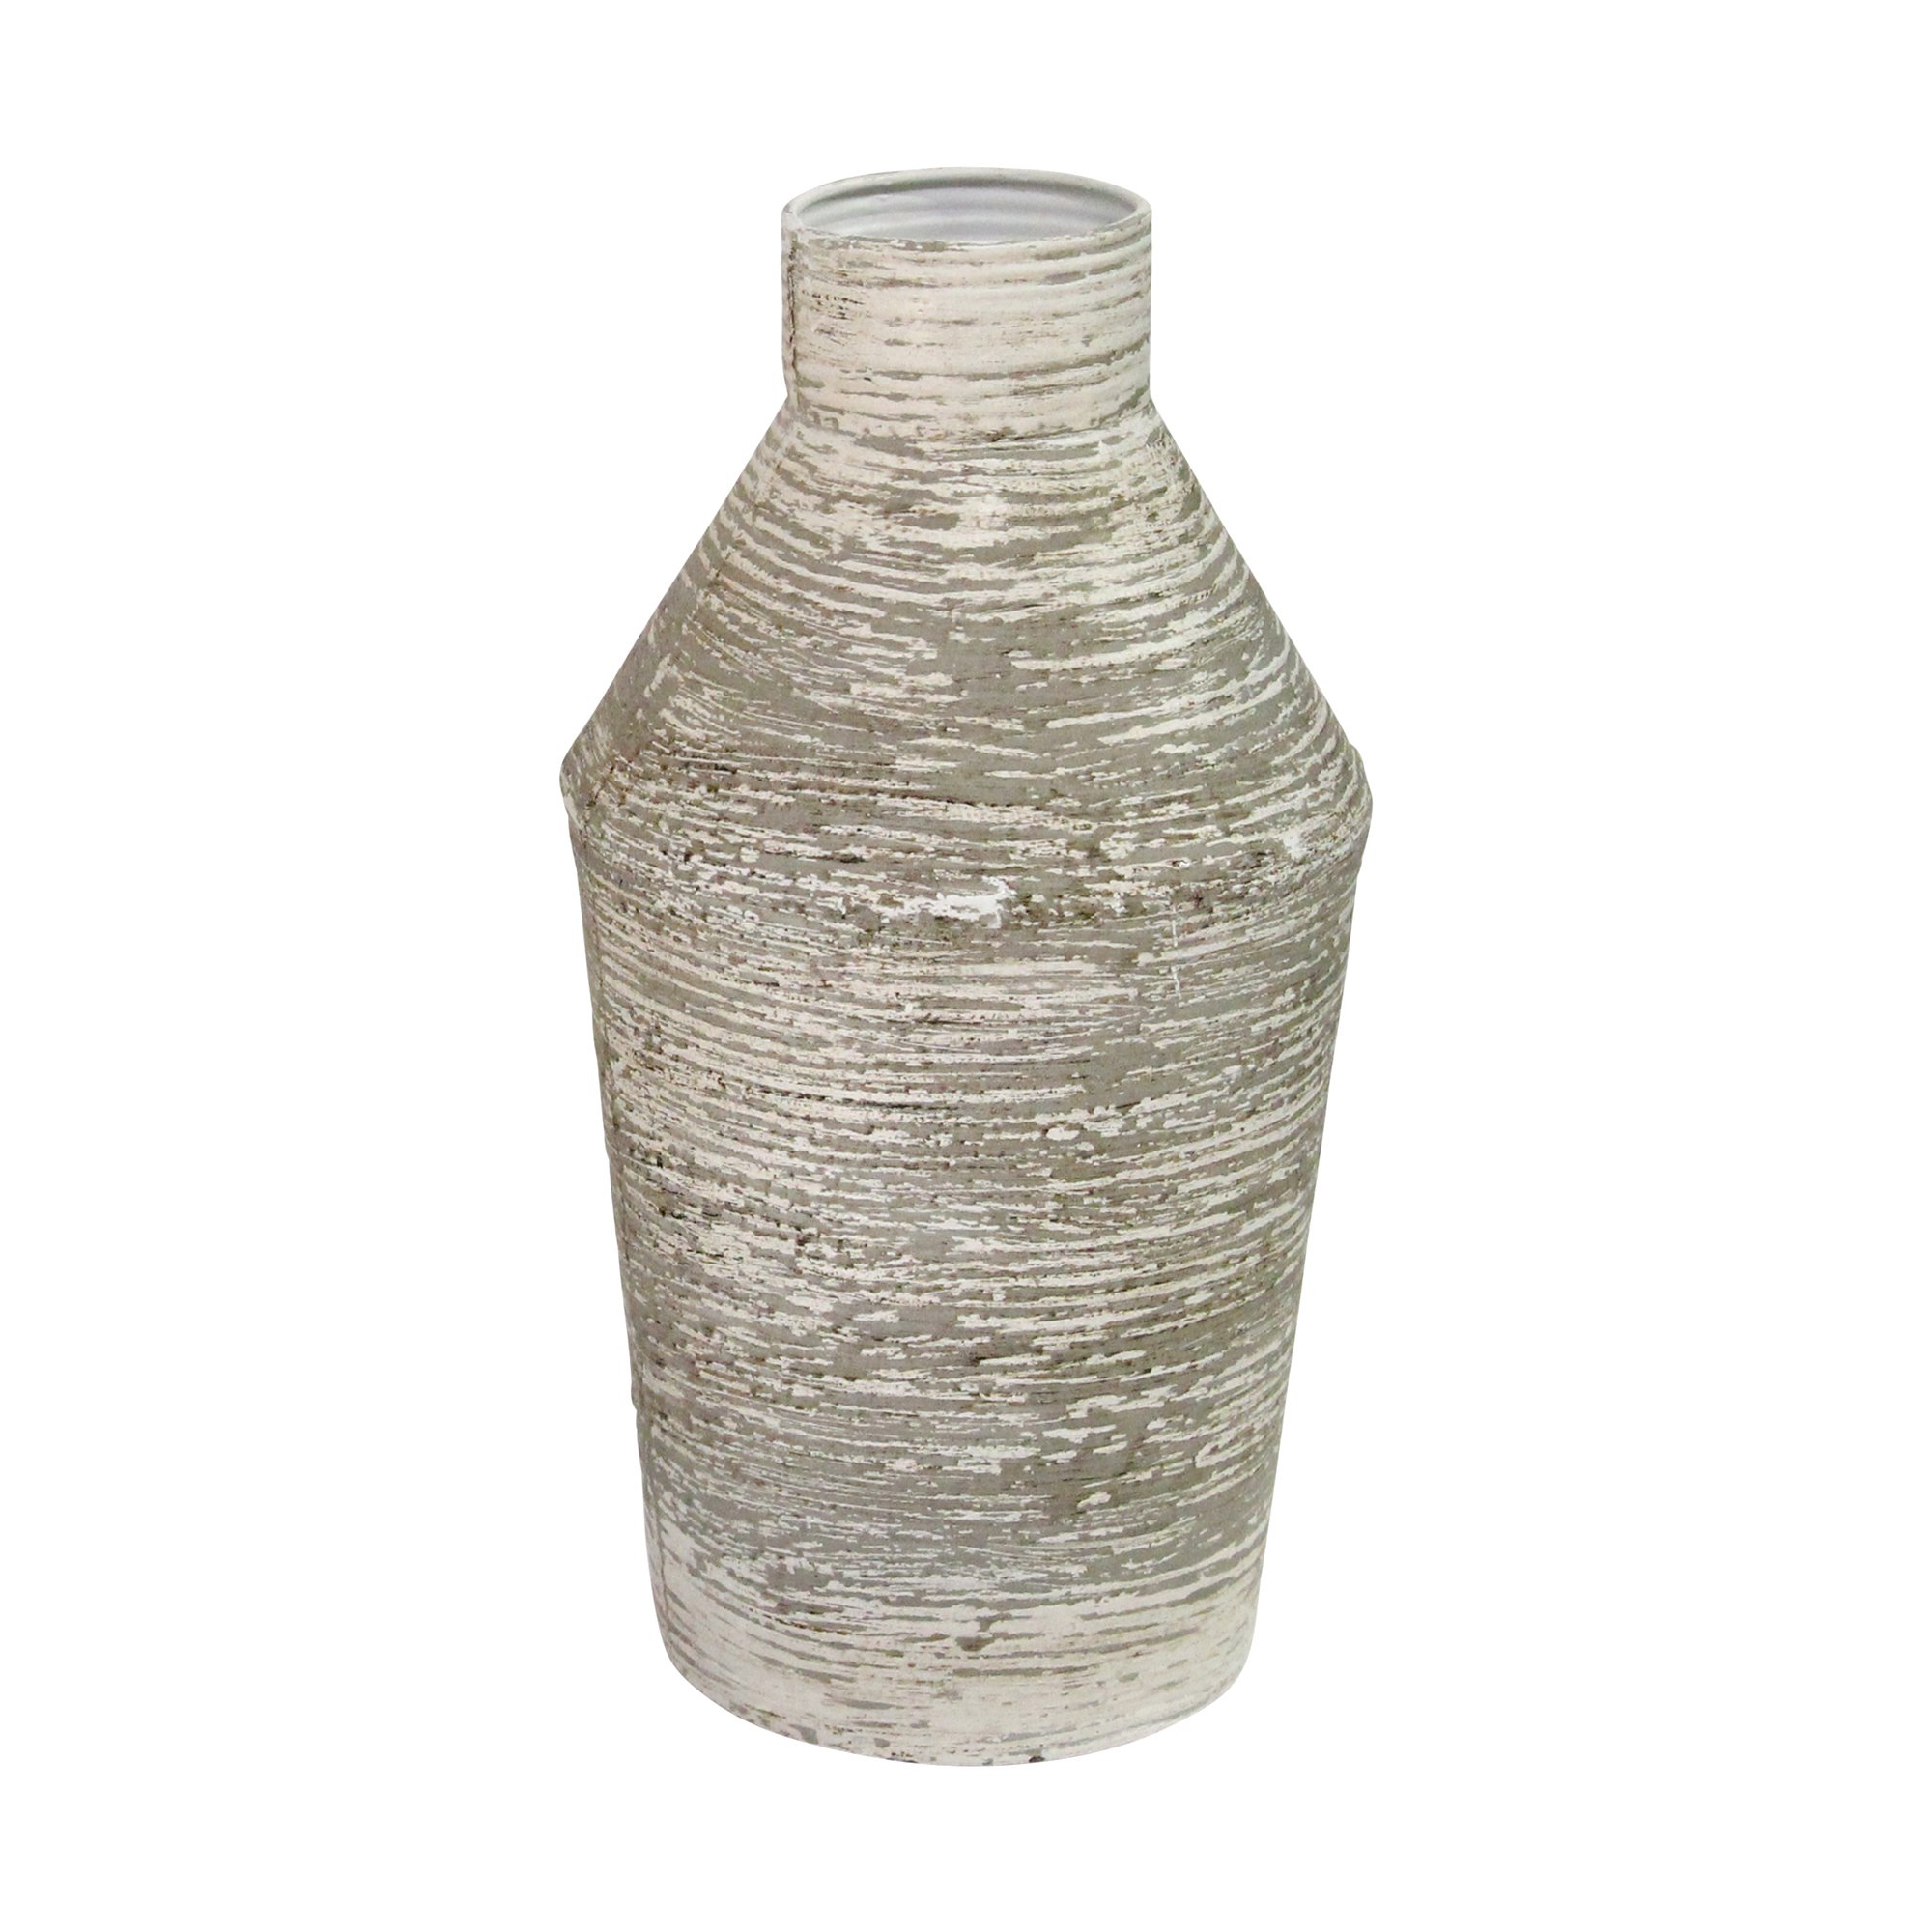 13" Boho Vibe Earth Tone Metal Decorative Table Vase